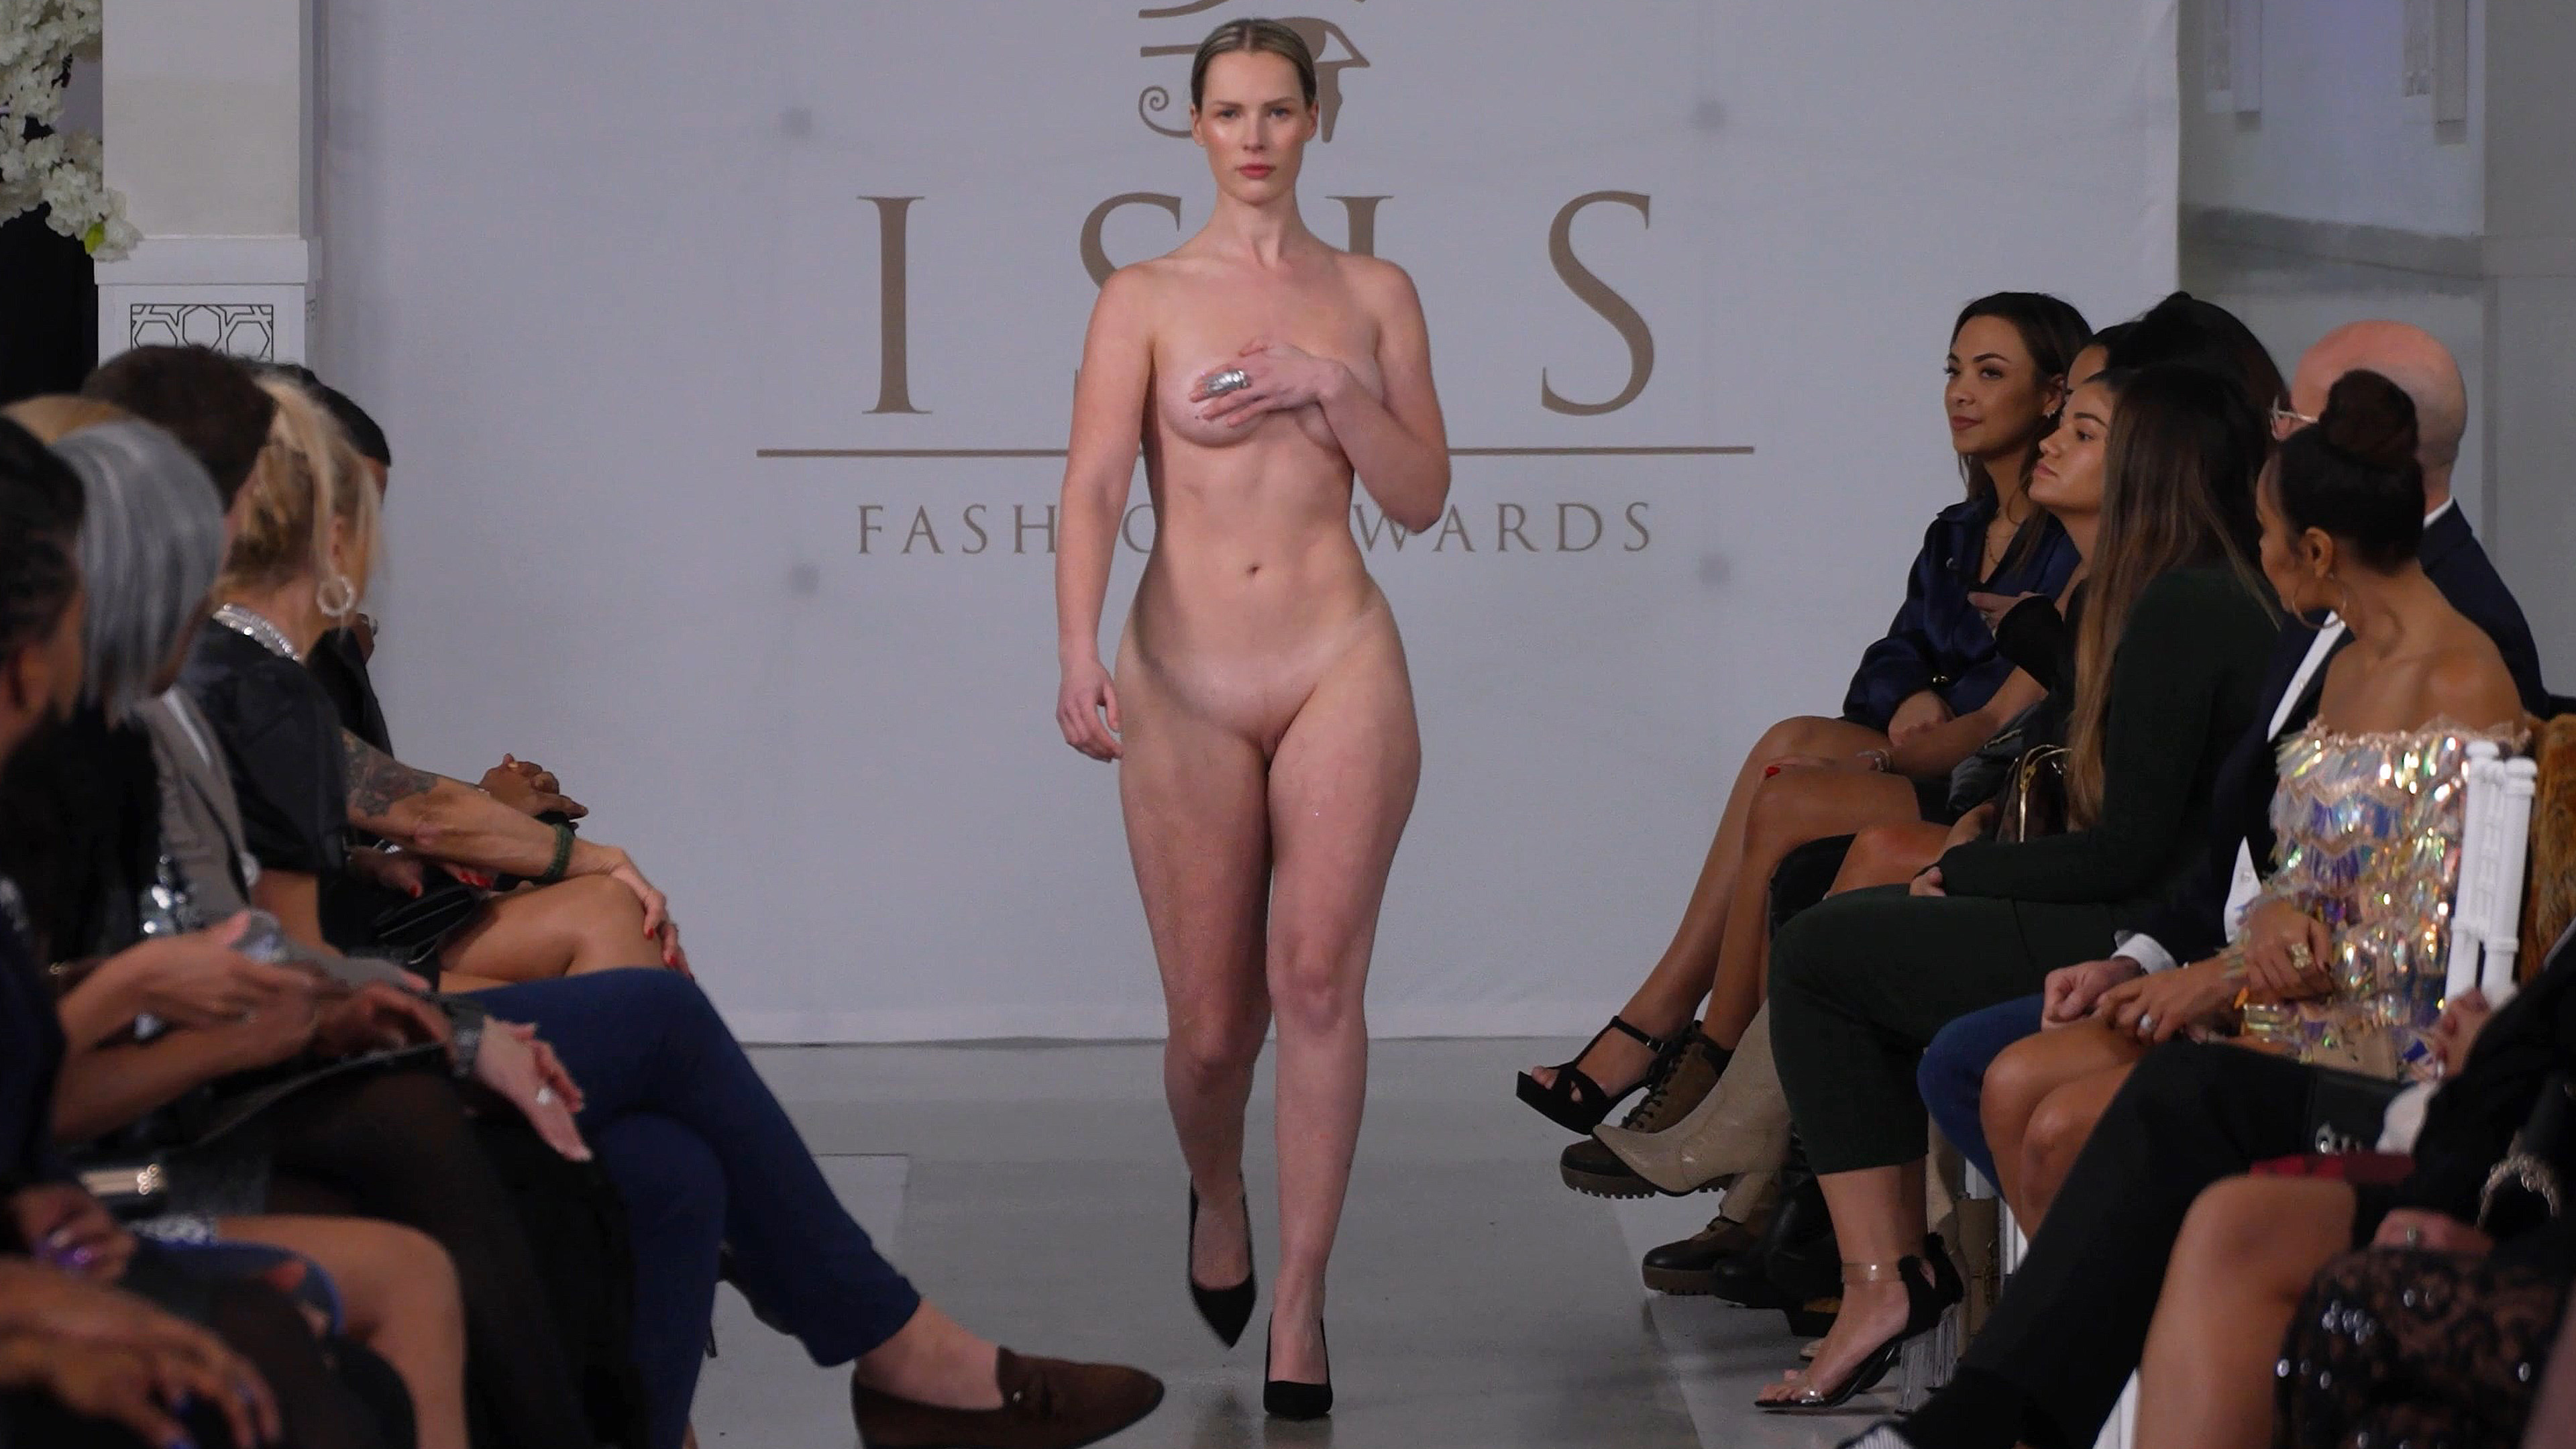 Models nude fashion